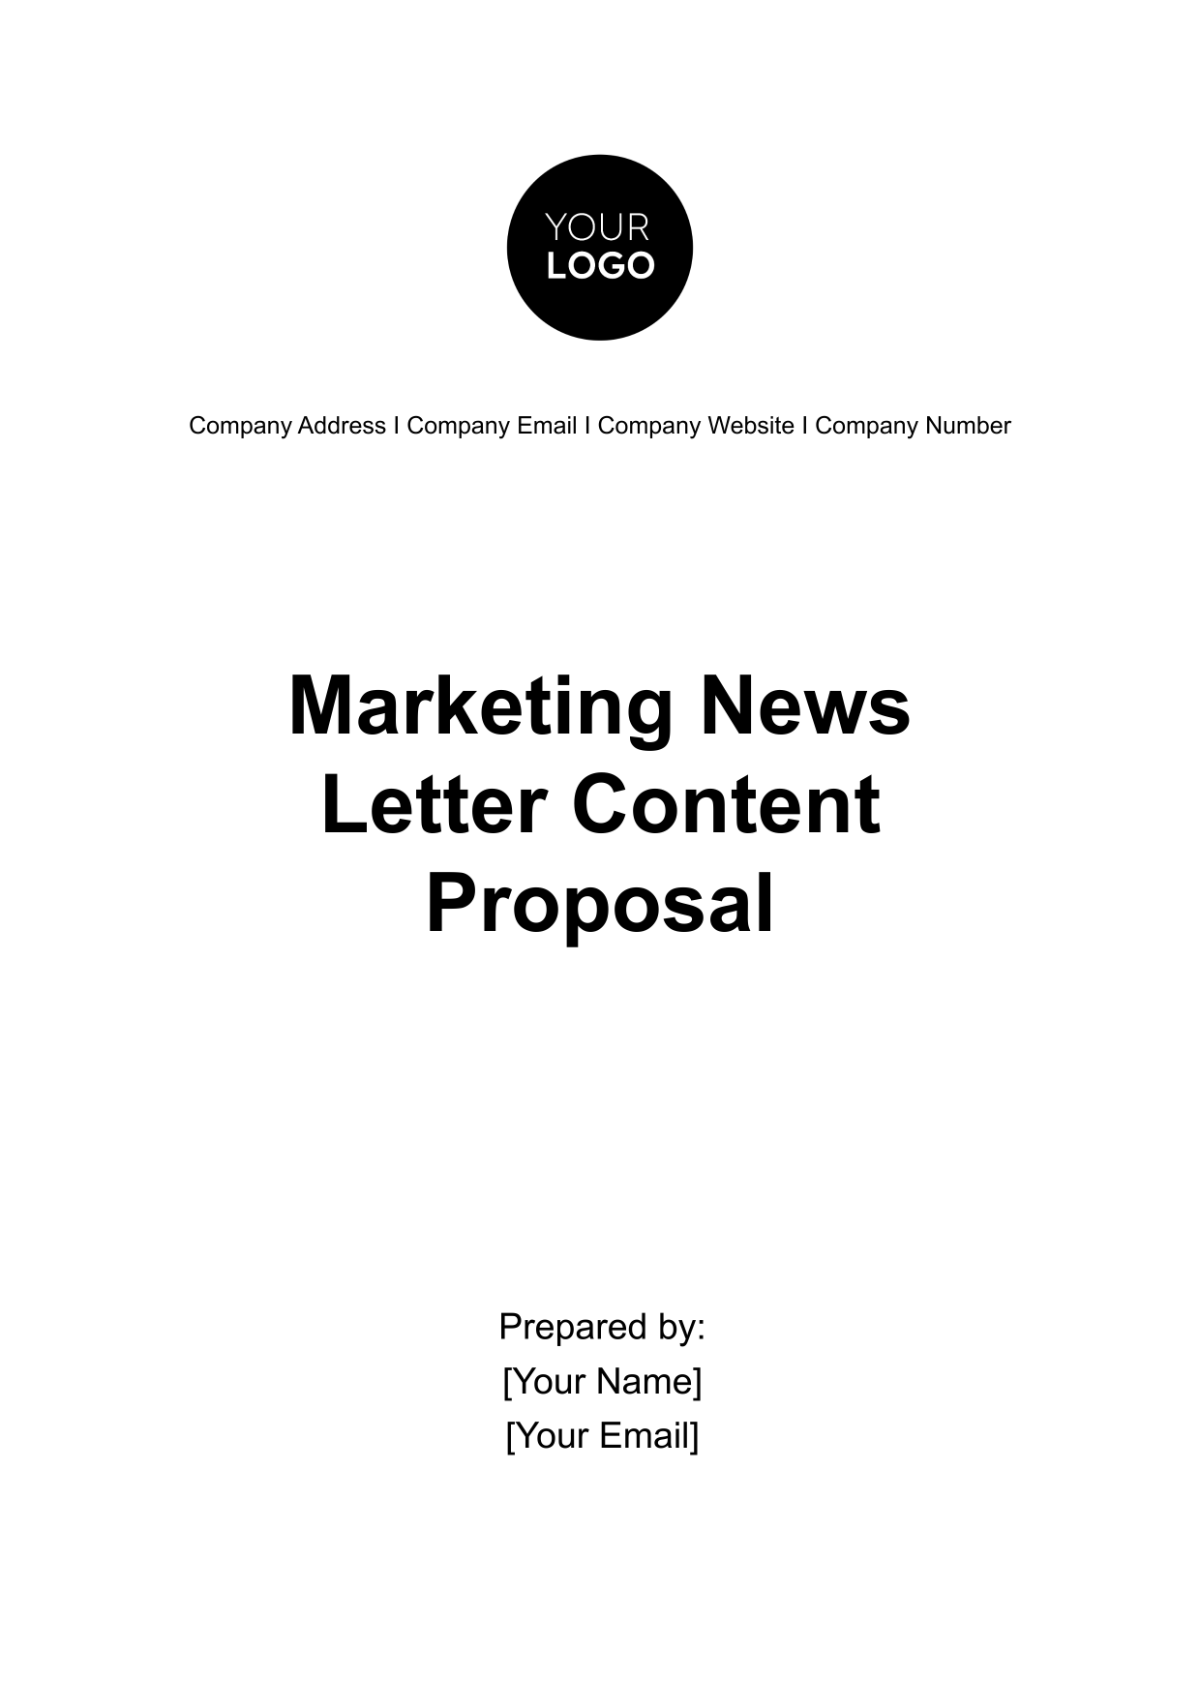 Marketing Newsletter Content Proposal Template